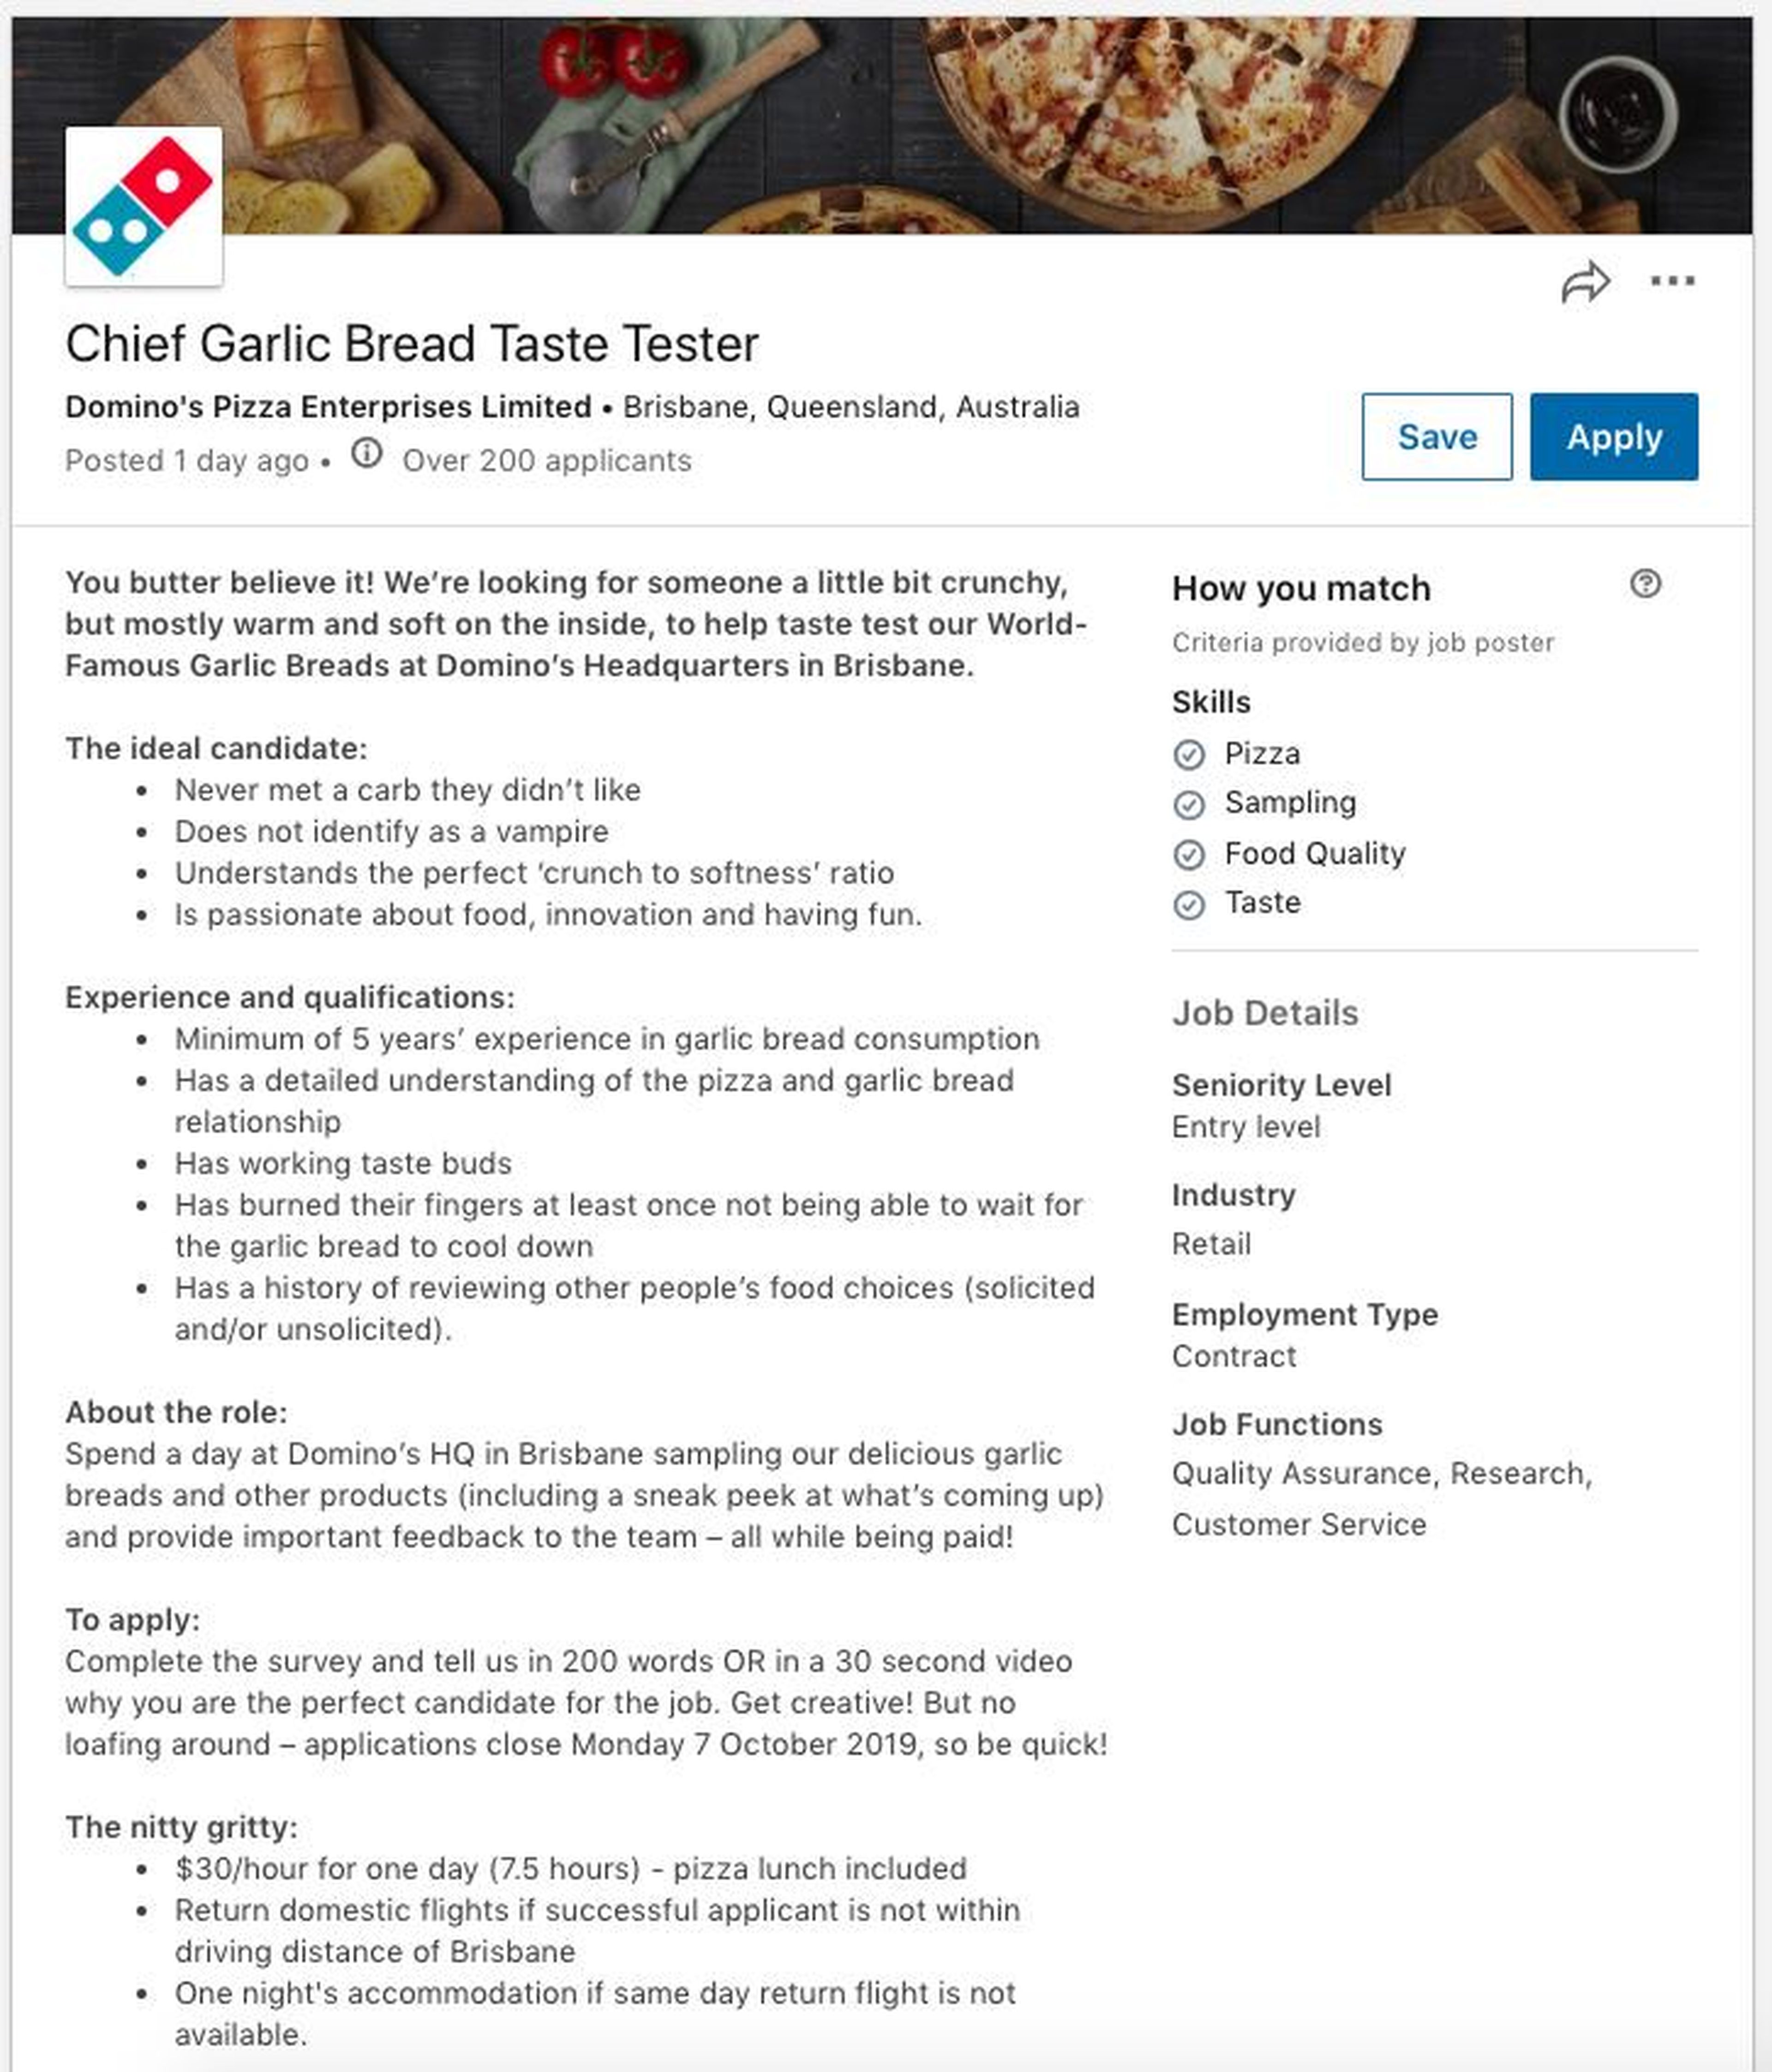 Domino's job posting on LinkedIn.